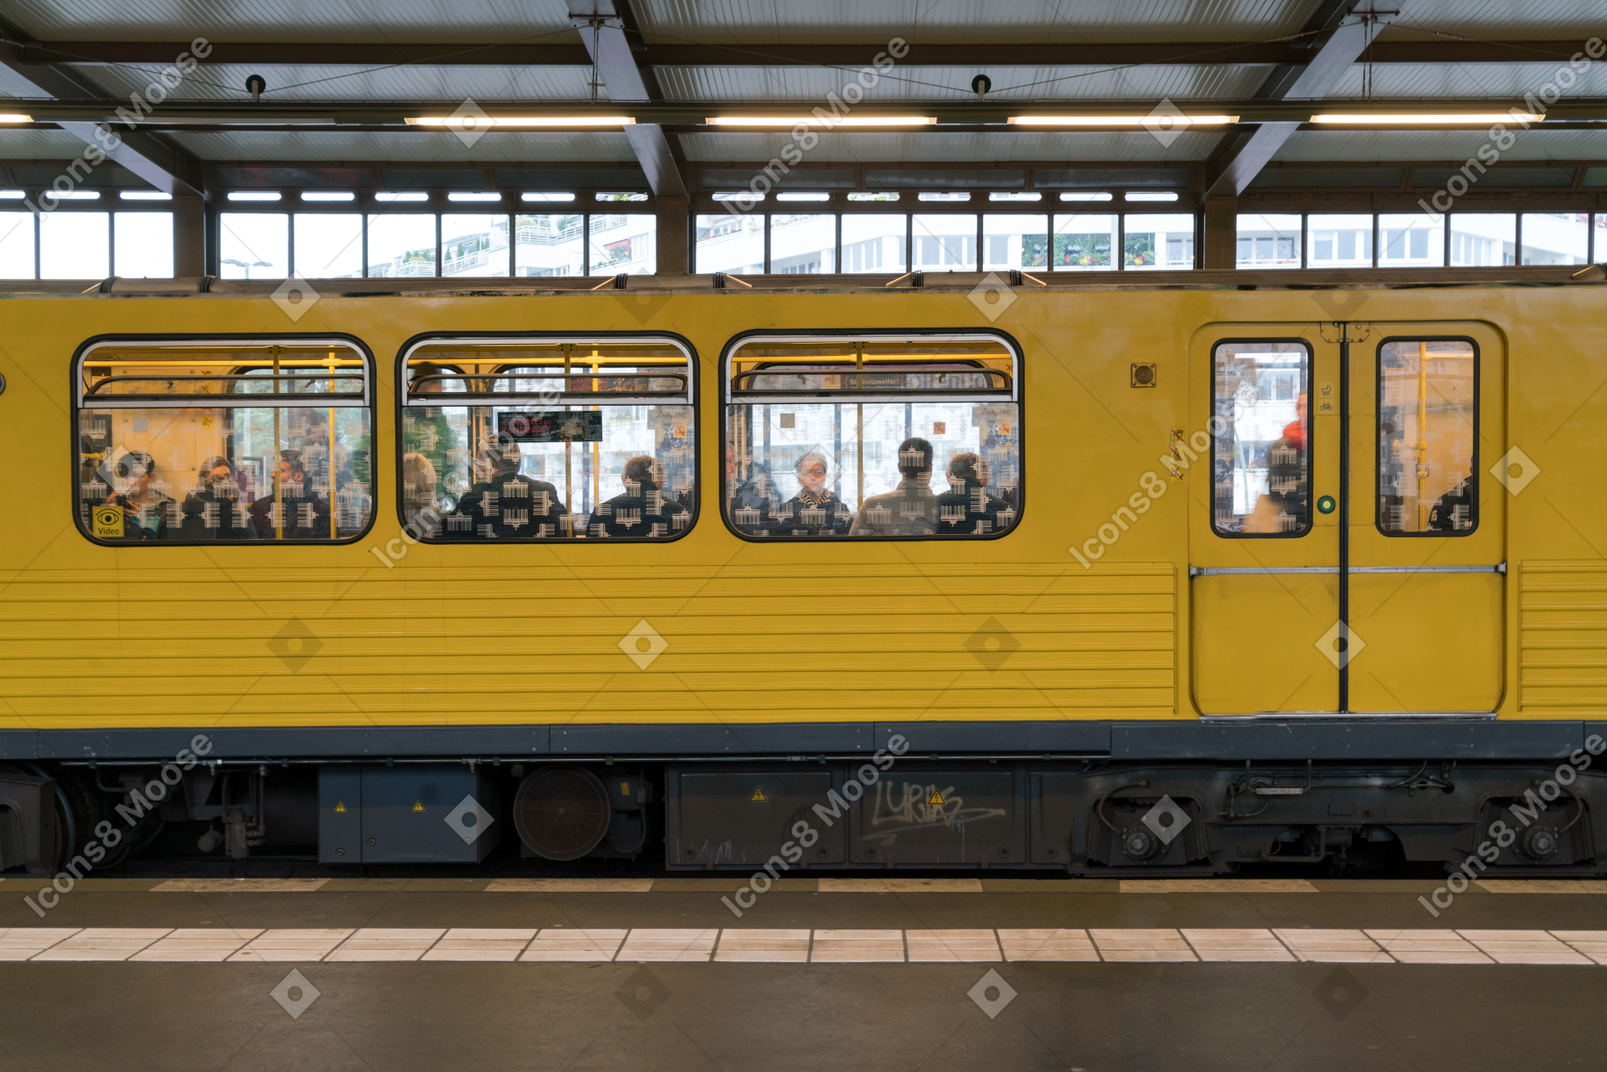 Fond de train jaune